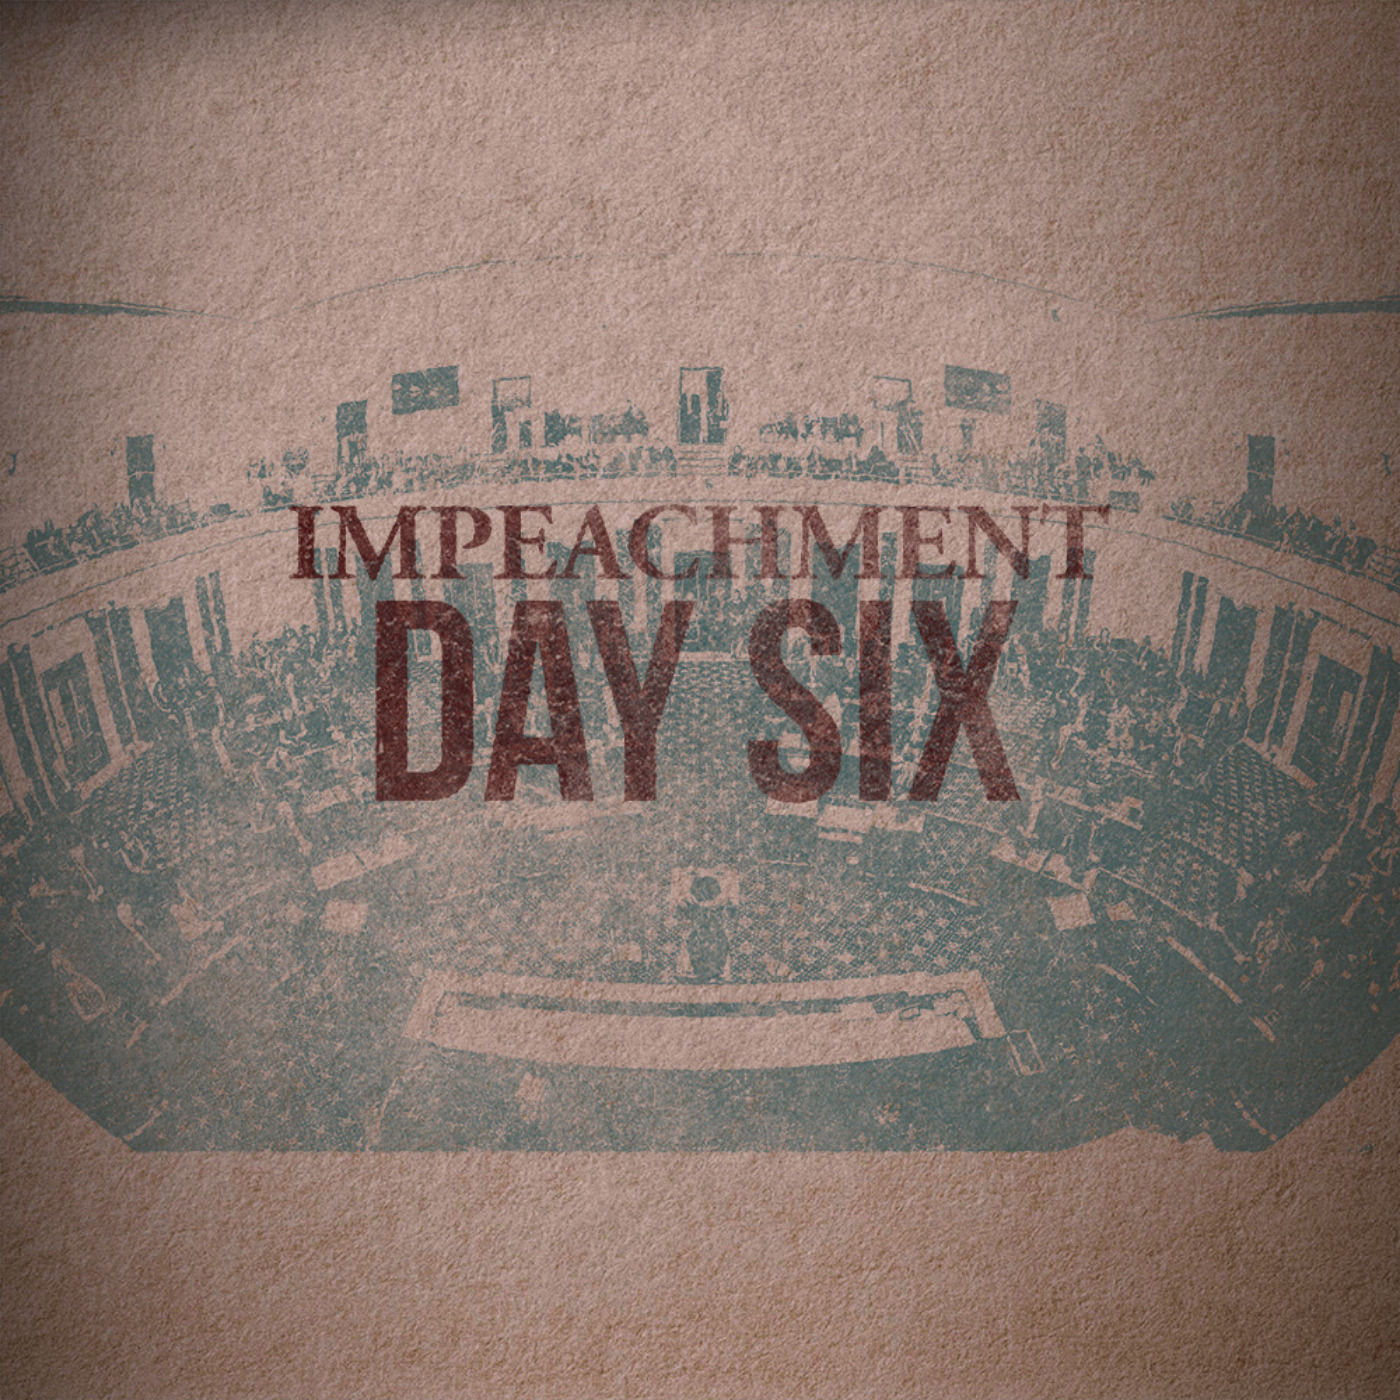 The Impeachment: Day 6